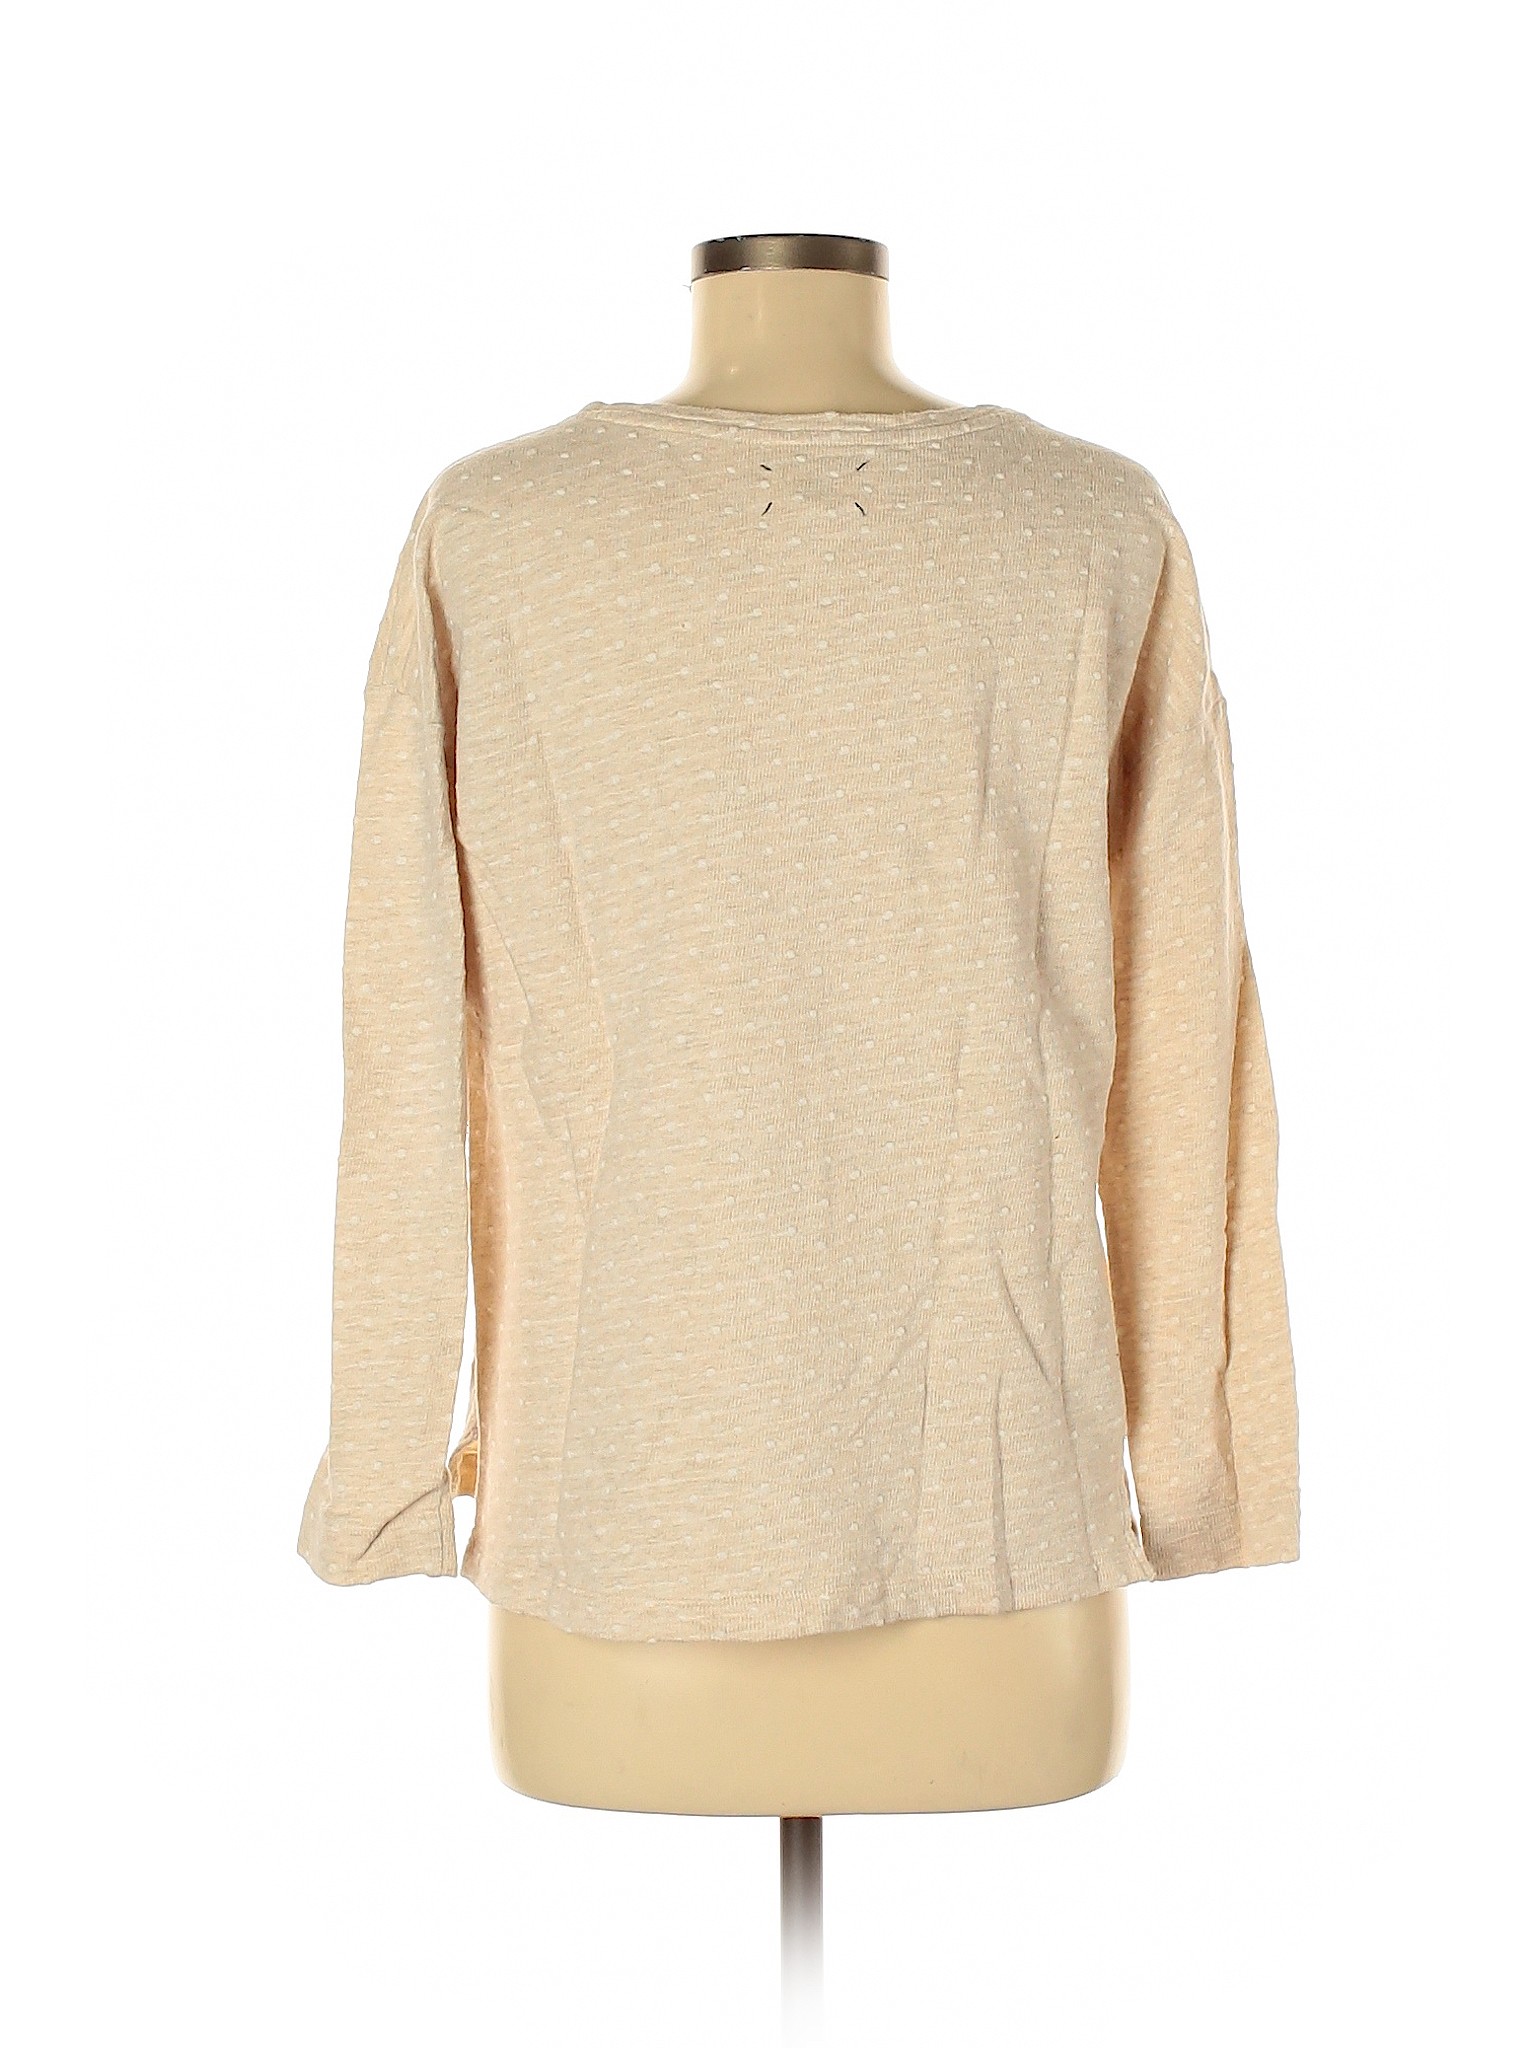 Lou & Grey Women Brown Long Sleeve Top M | eBay